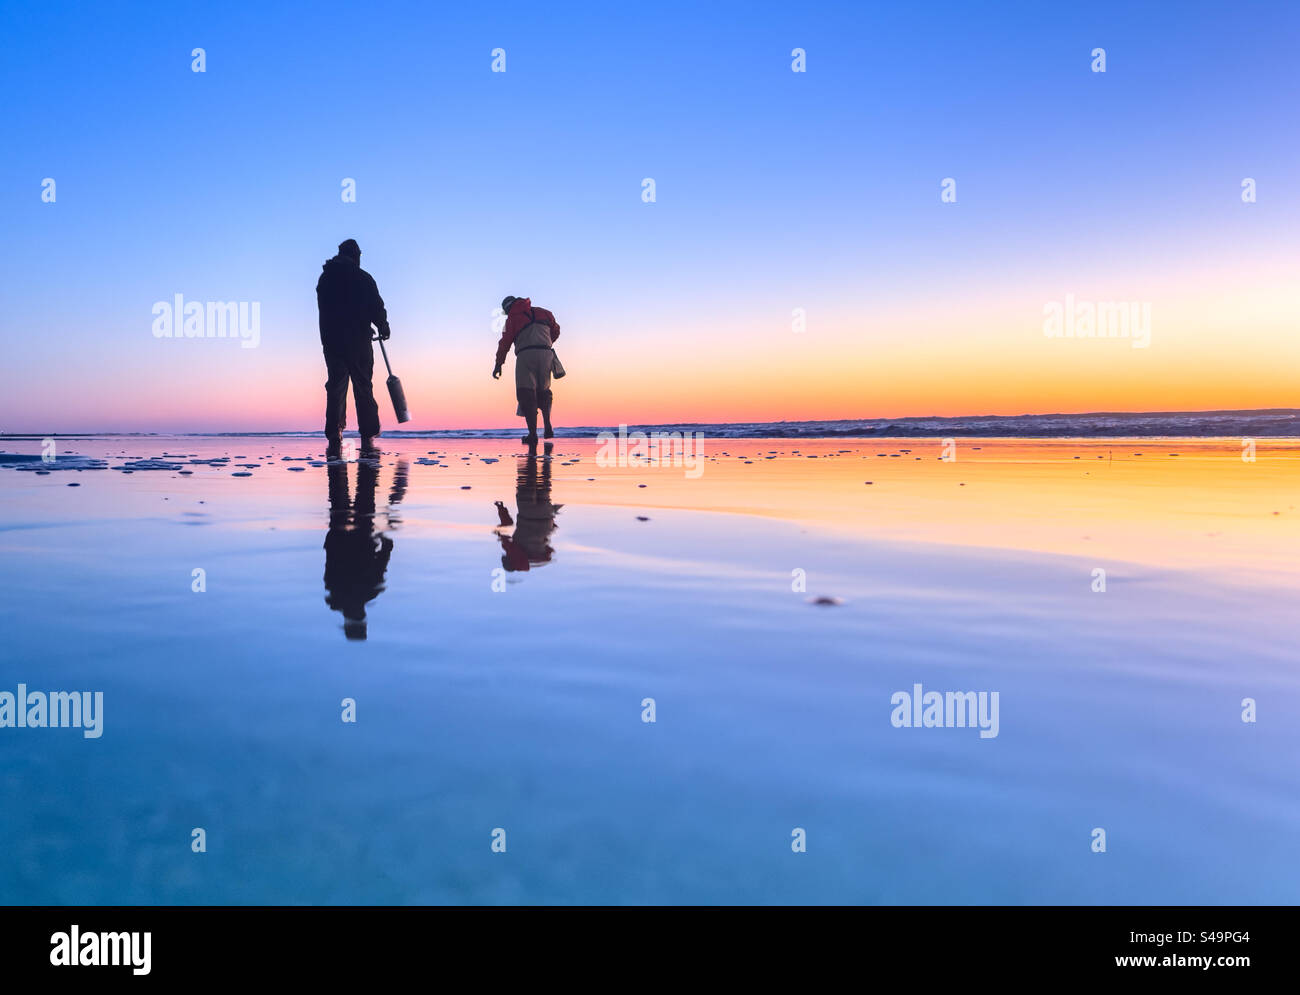 Exploring the beach at sunset Stock Photo